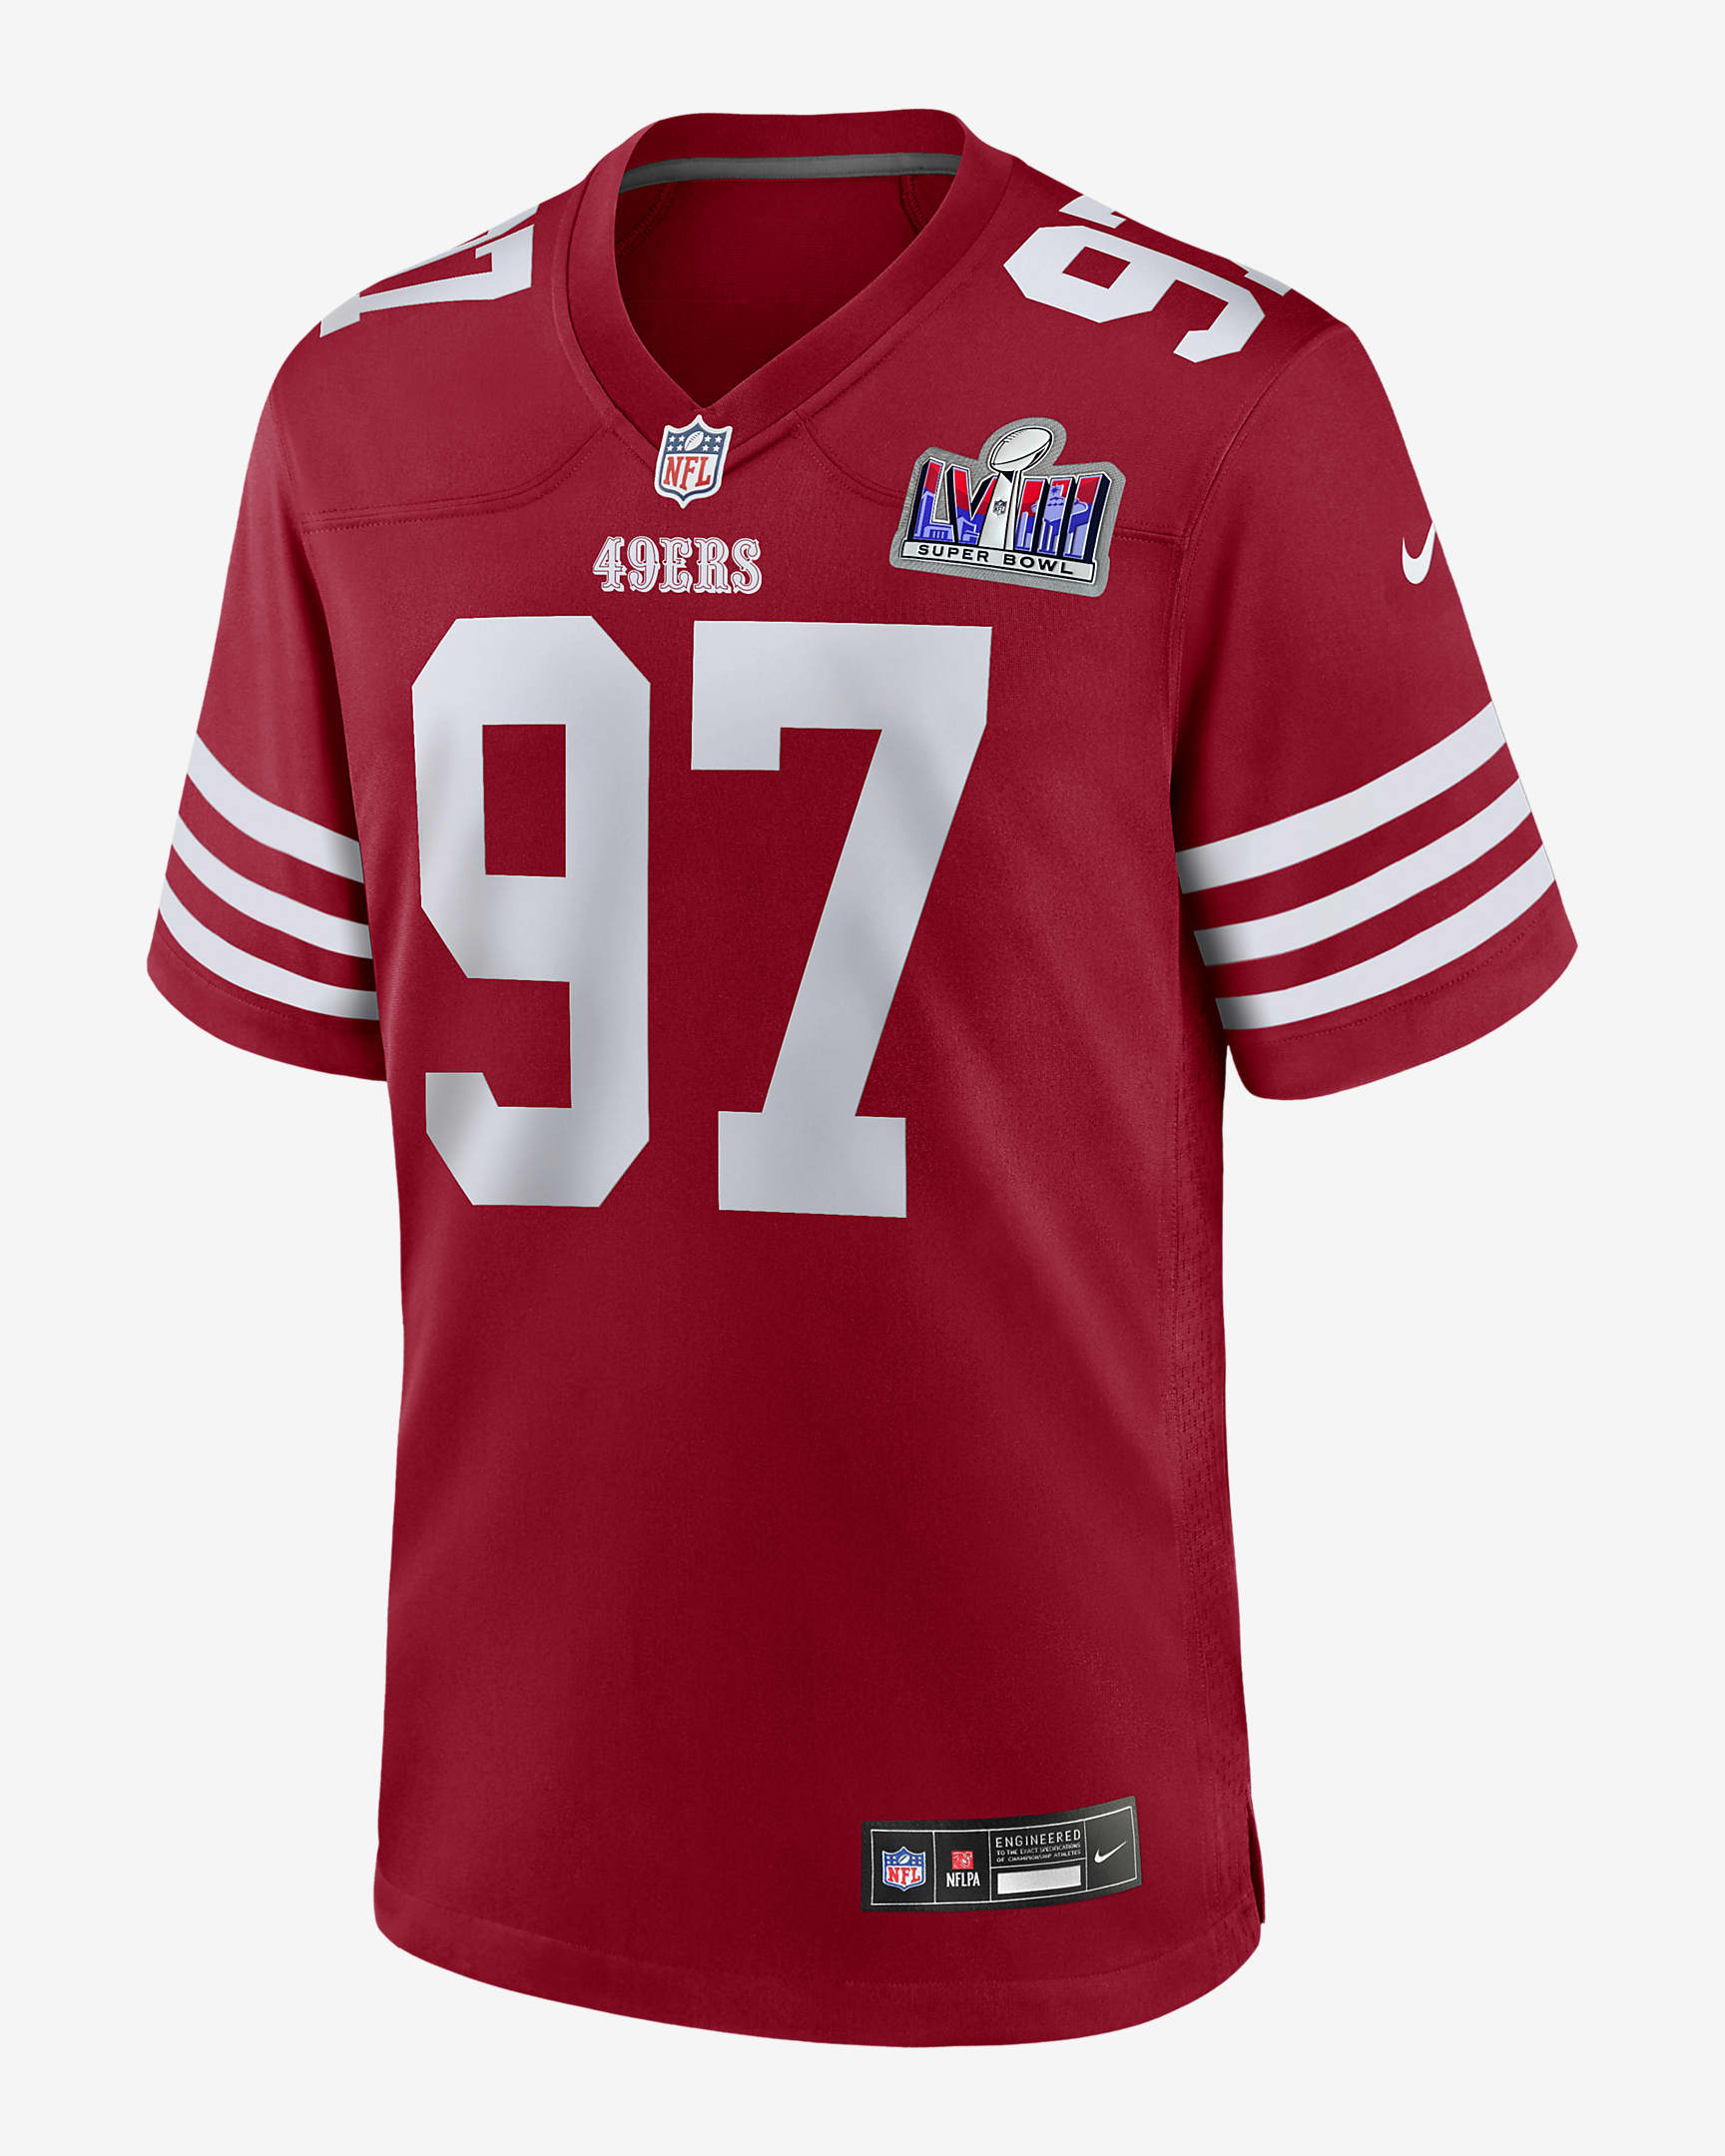 Jersey Nike de la NFL Game para hombre Nick Bosa San Francisco 49ers ...